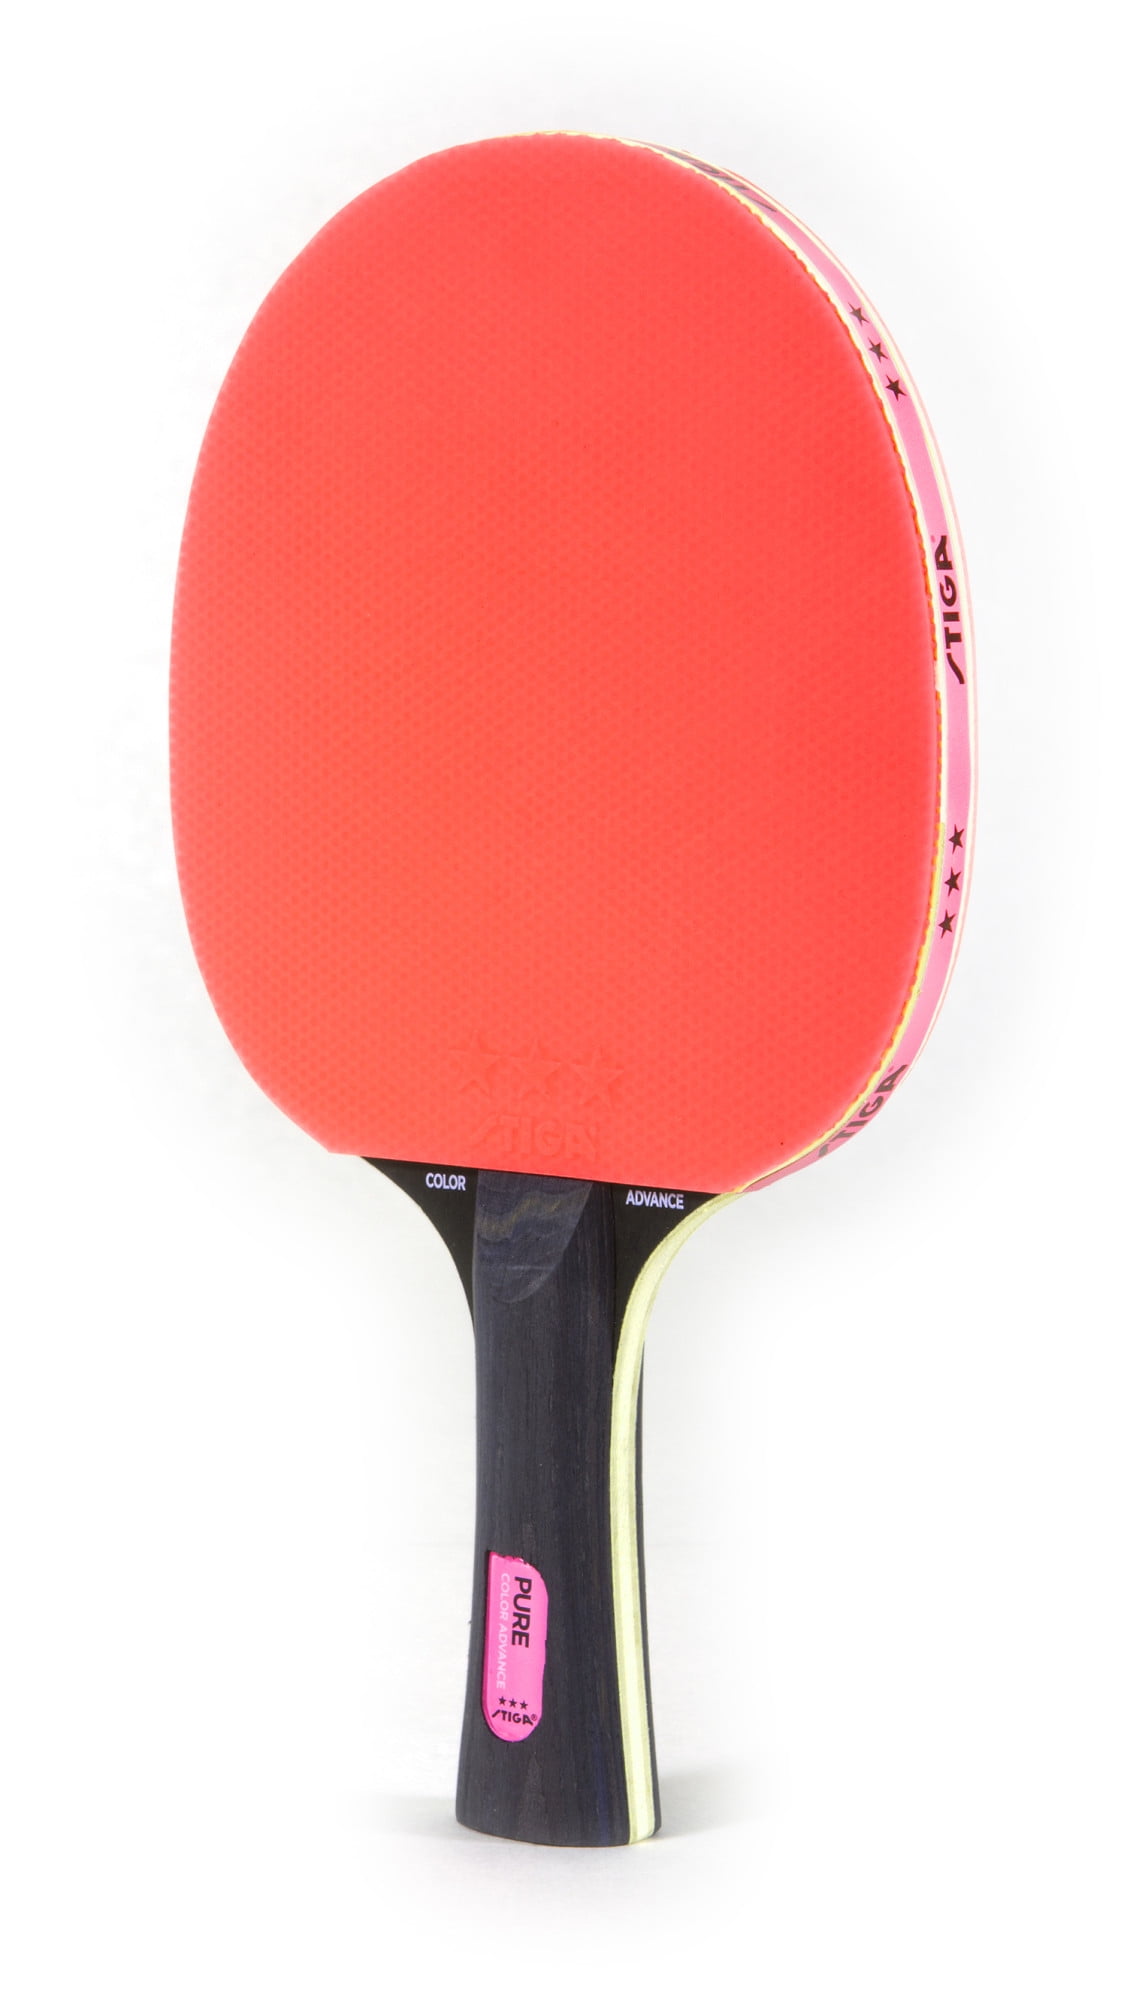 Stiga Pure Color Advance Table Tennis Racket 